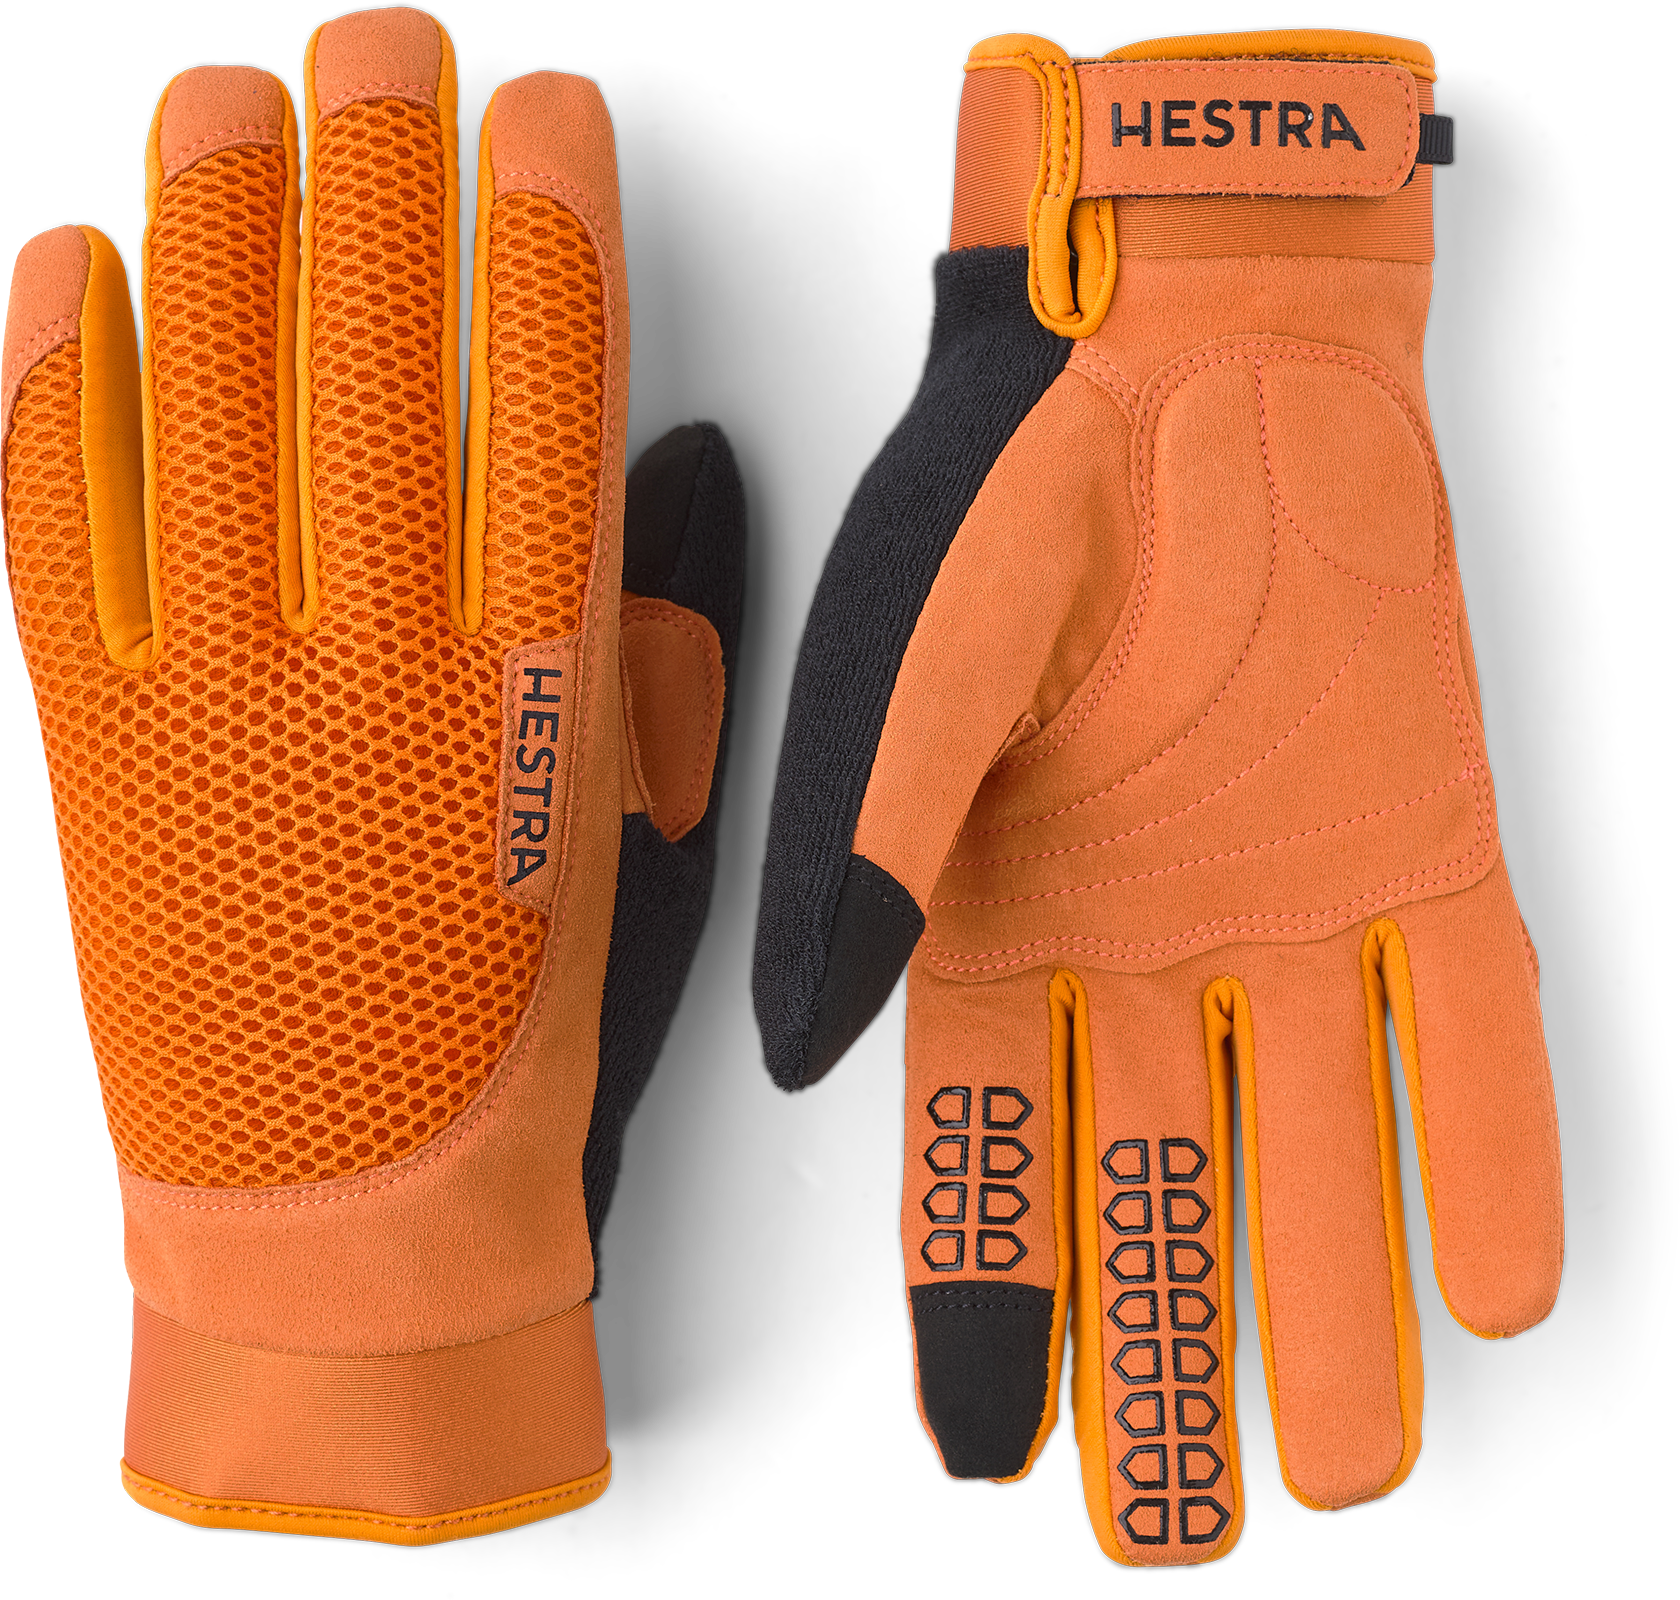 - Damen MTB-Handschuhe Fahrradhandschuhe & Hestra Gloves |